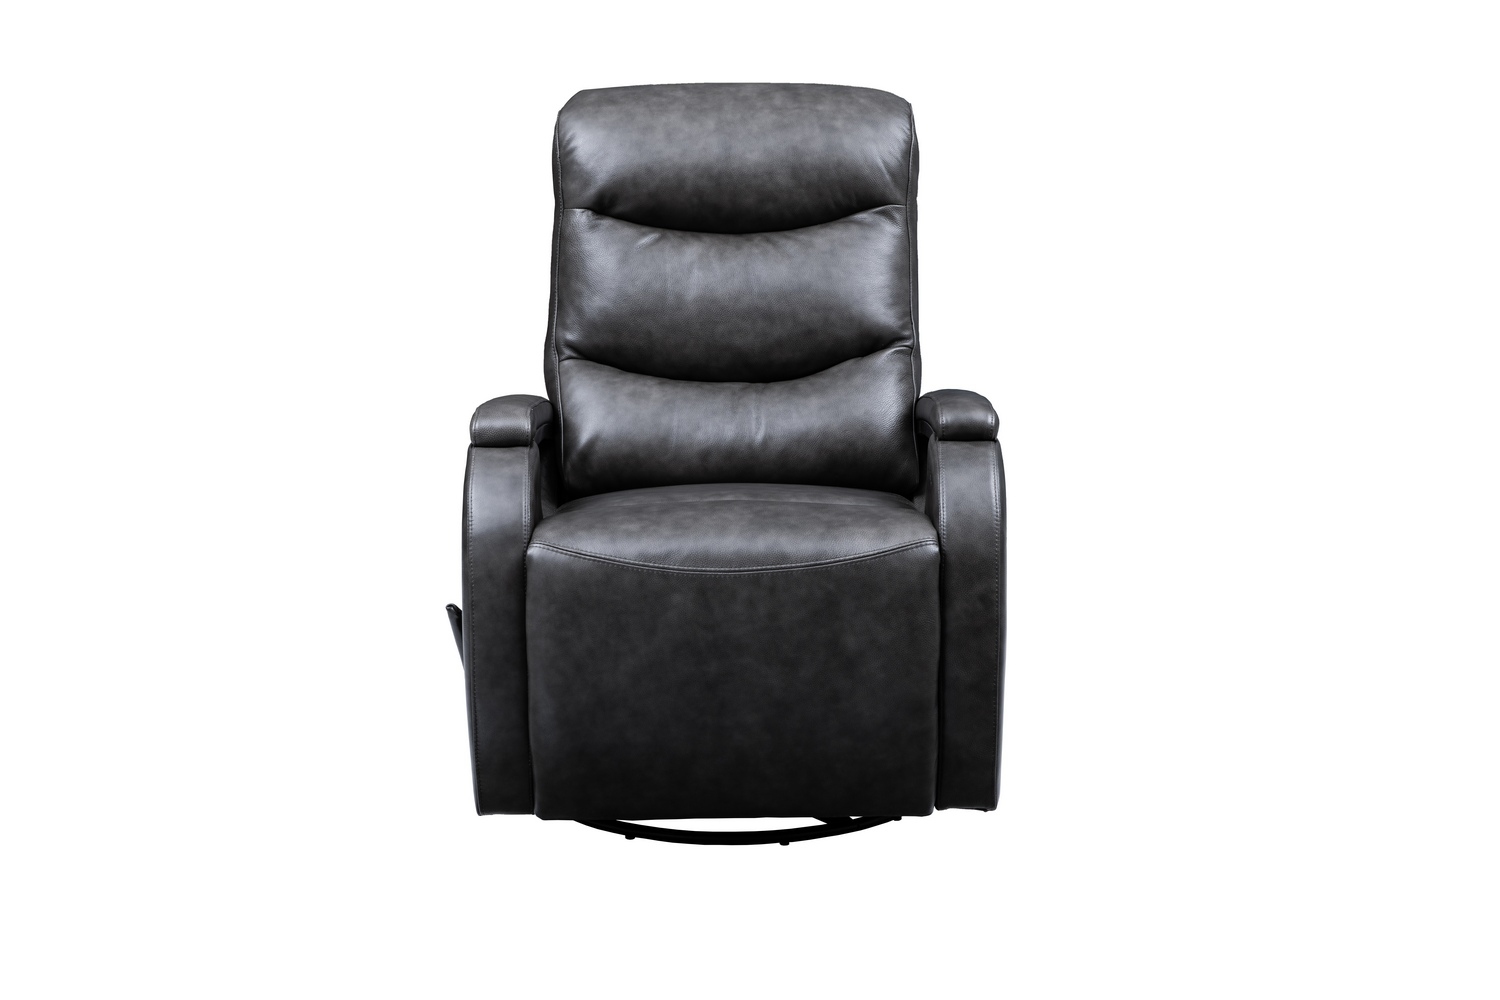 Barcalounger Jonas Swivel Glider Recliner Chair - Ryegate Gray/Leather match